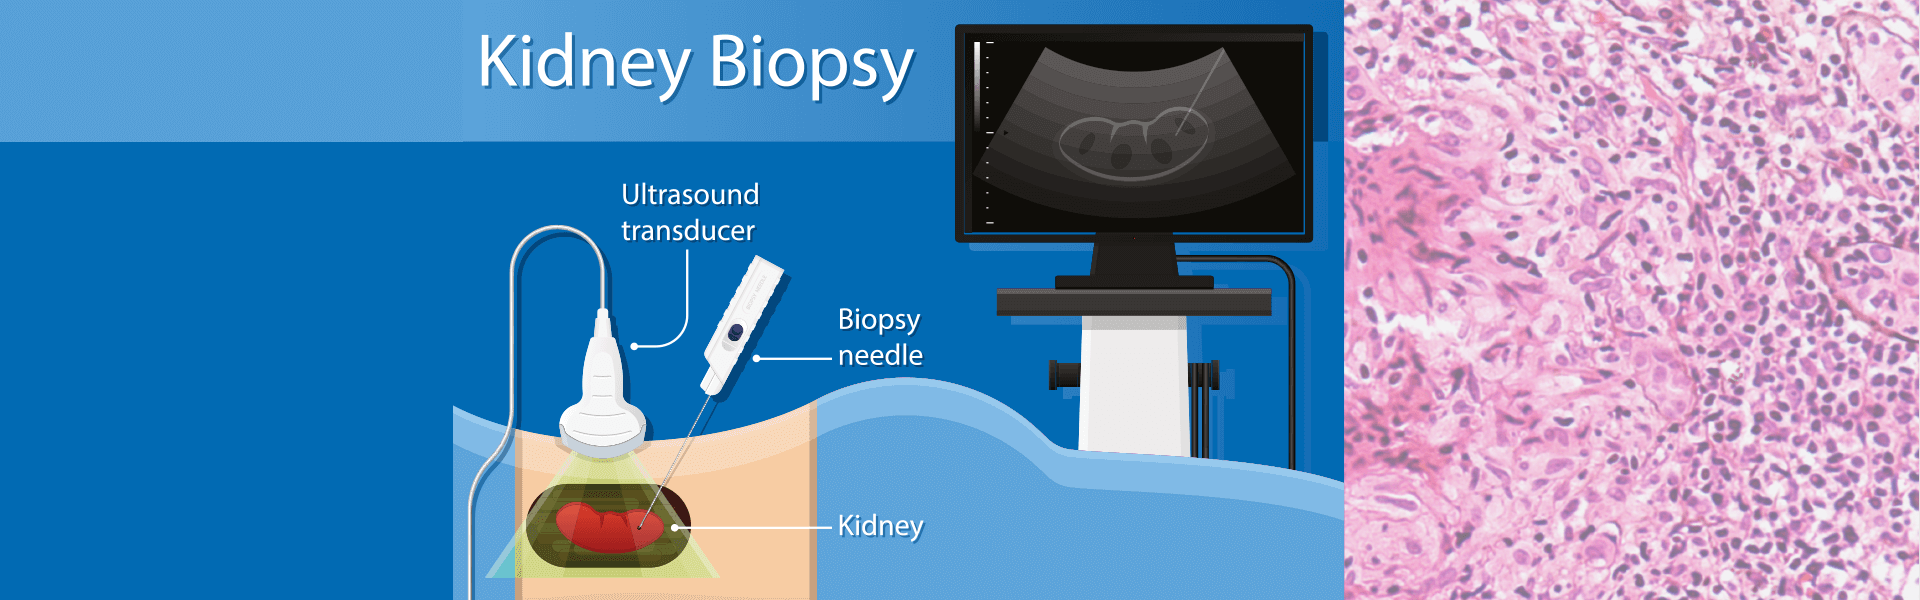 Kidney Biopsy in Bangalore | Kidney Biopsy Procedure - Manipal Hospitals